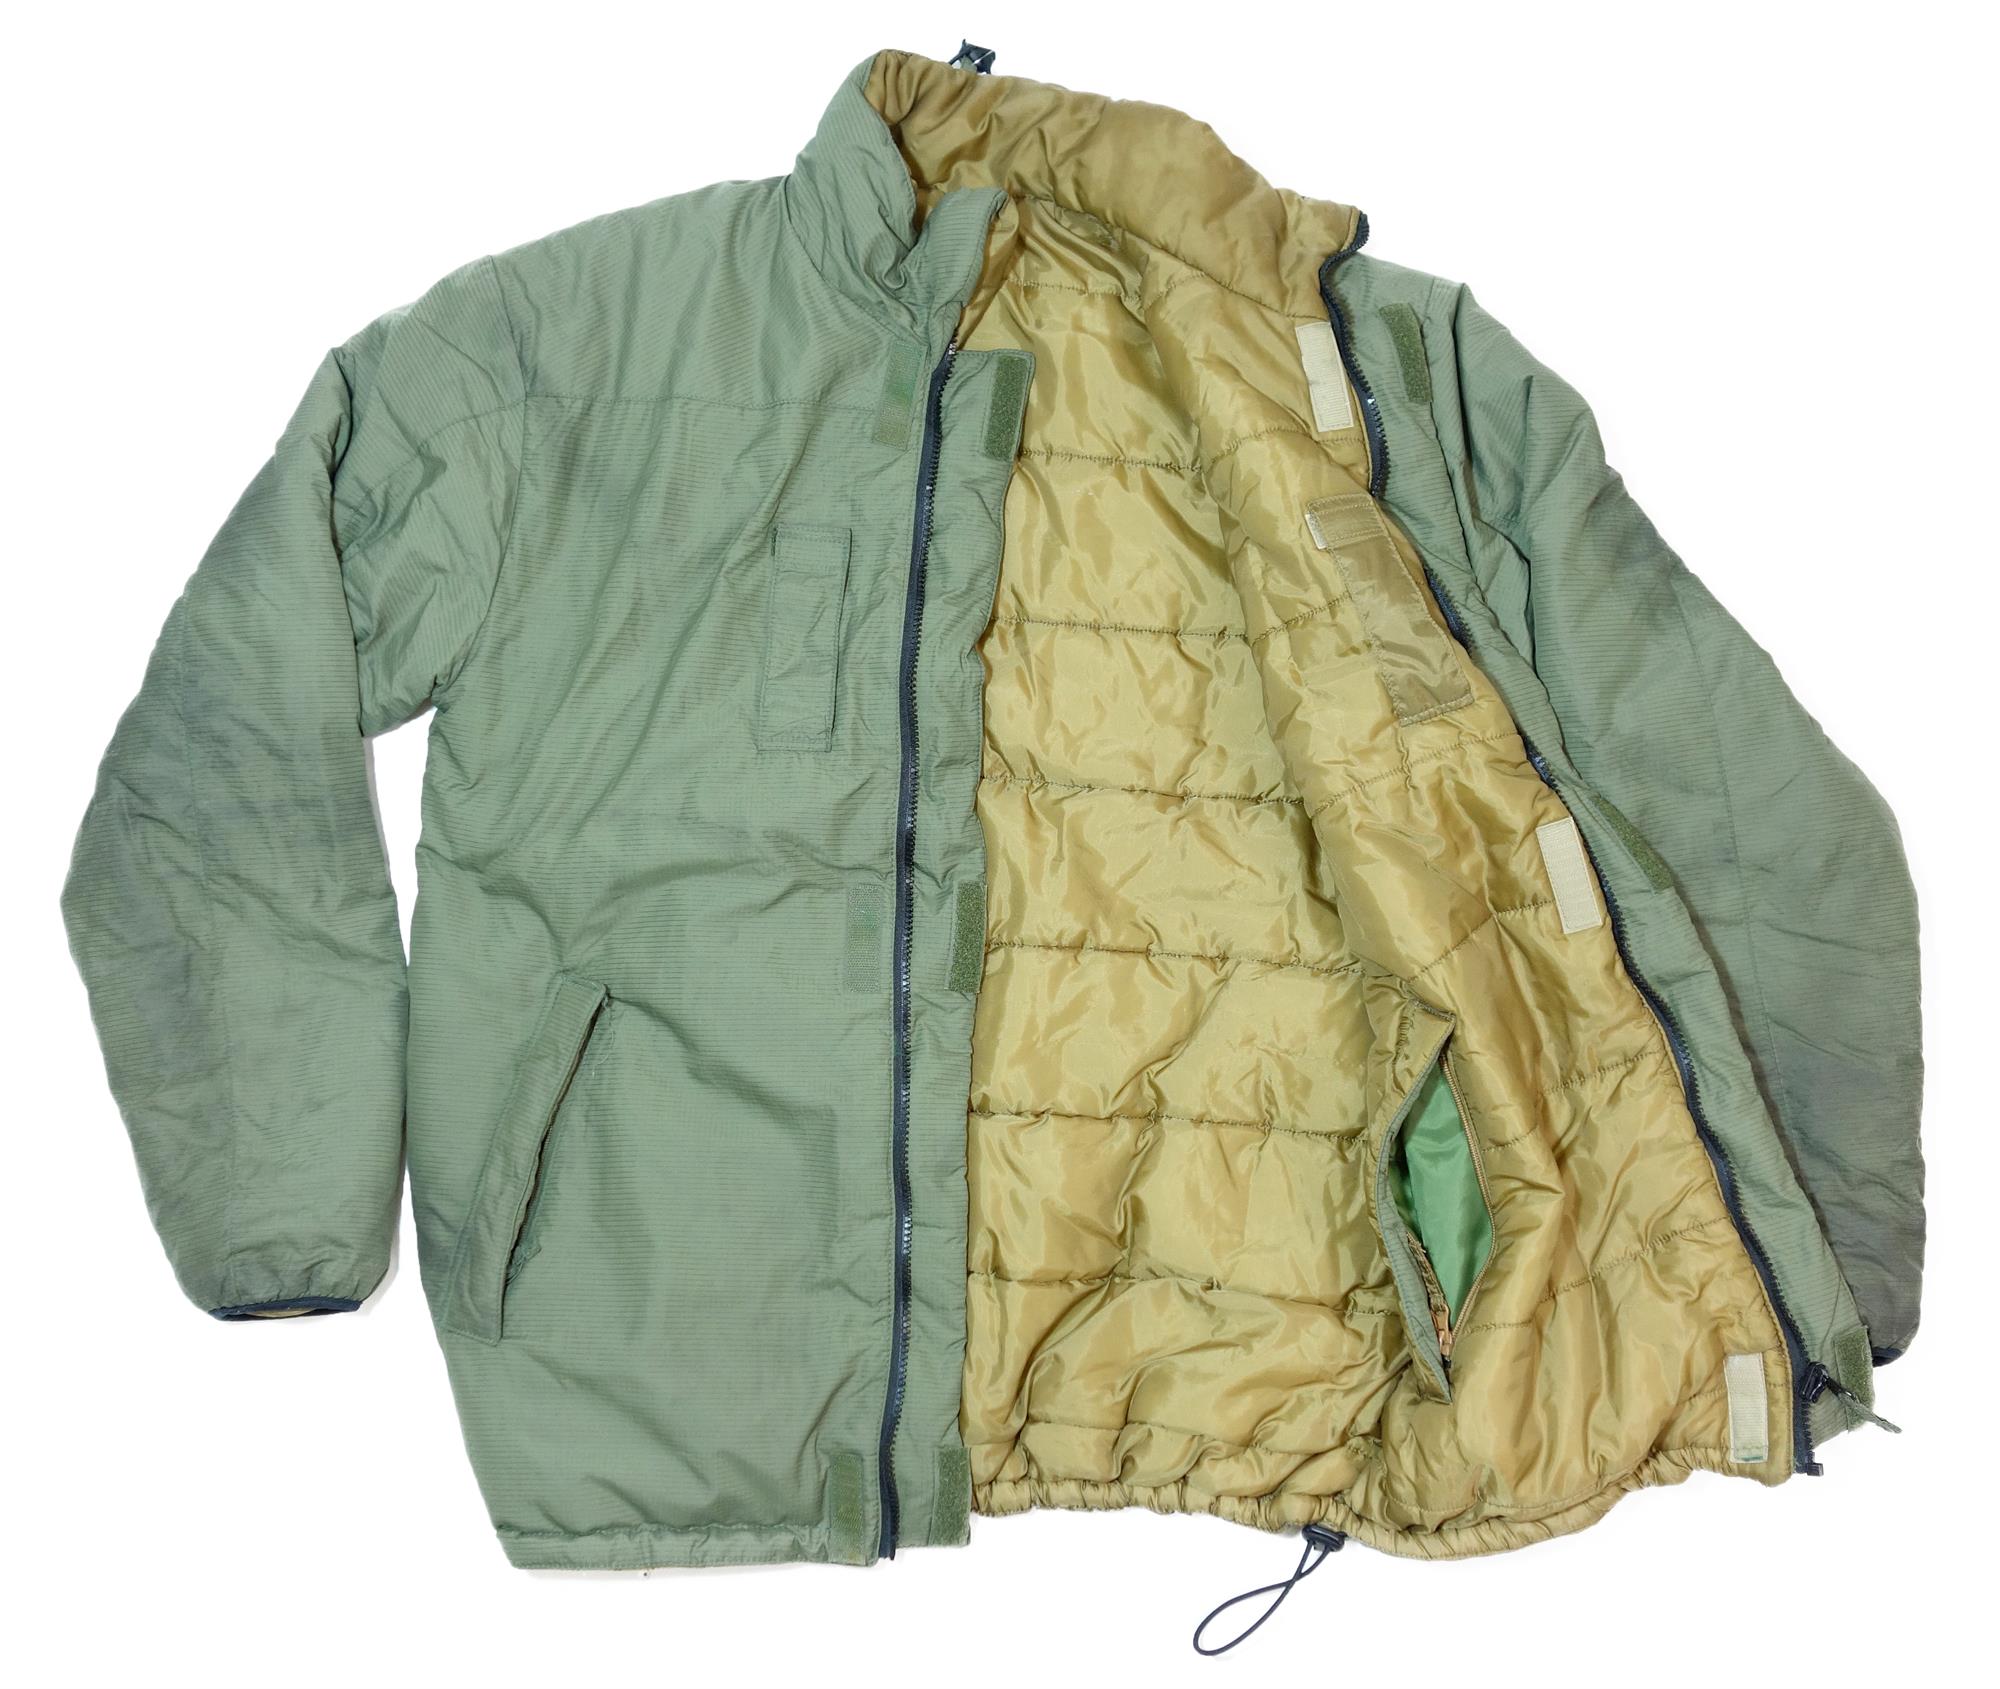 Dutch Army Surplus Cold Weather Softee Reversible Jacket - Surplus & Lost